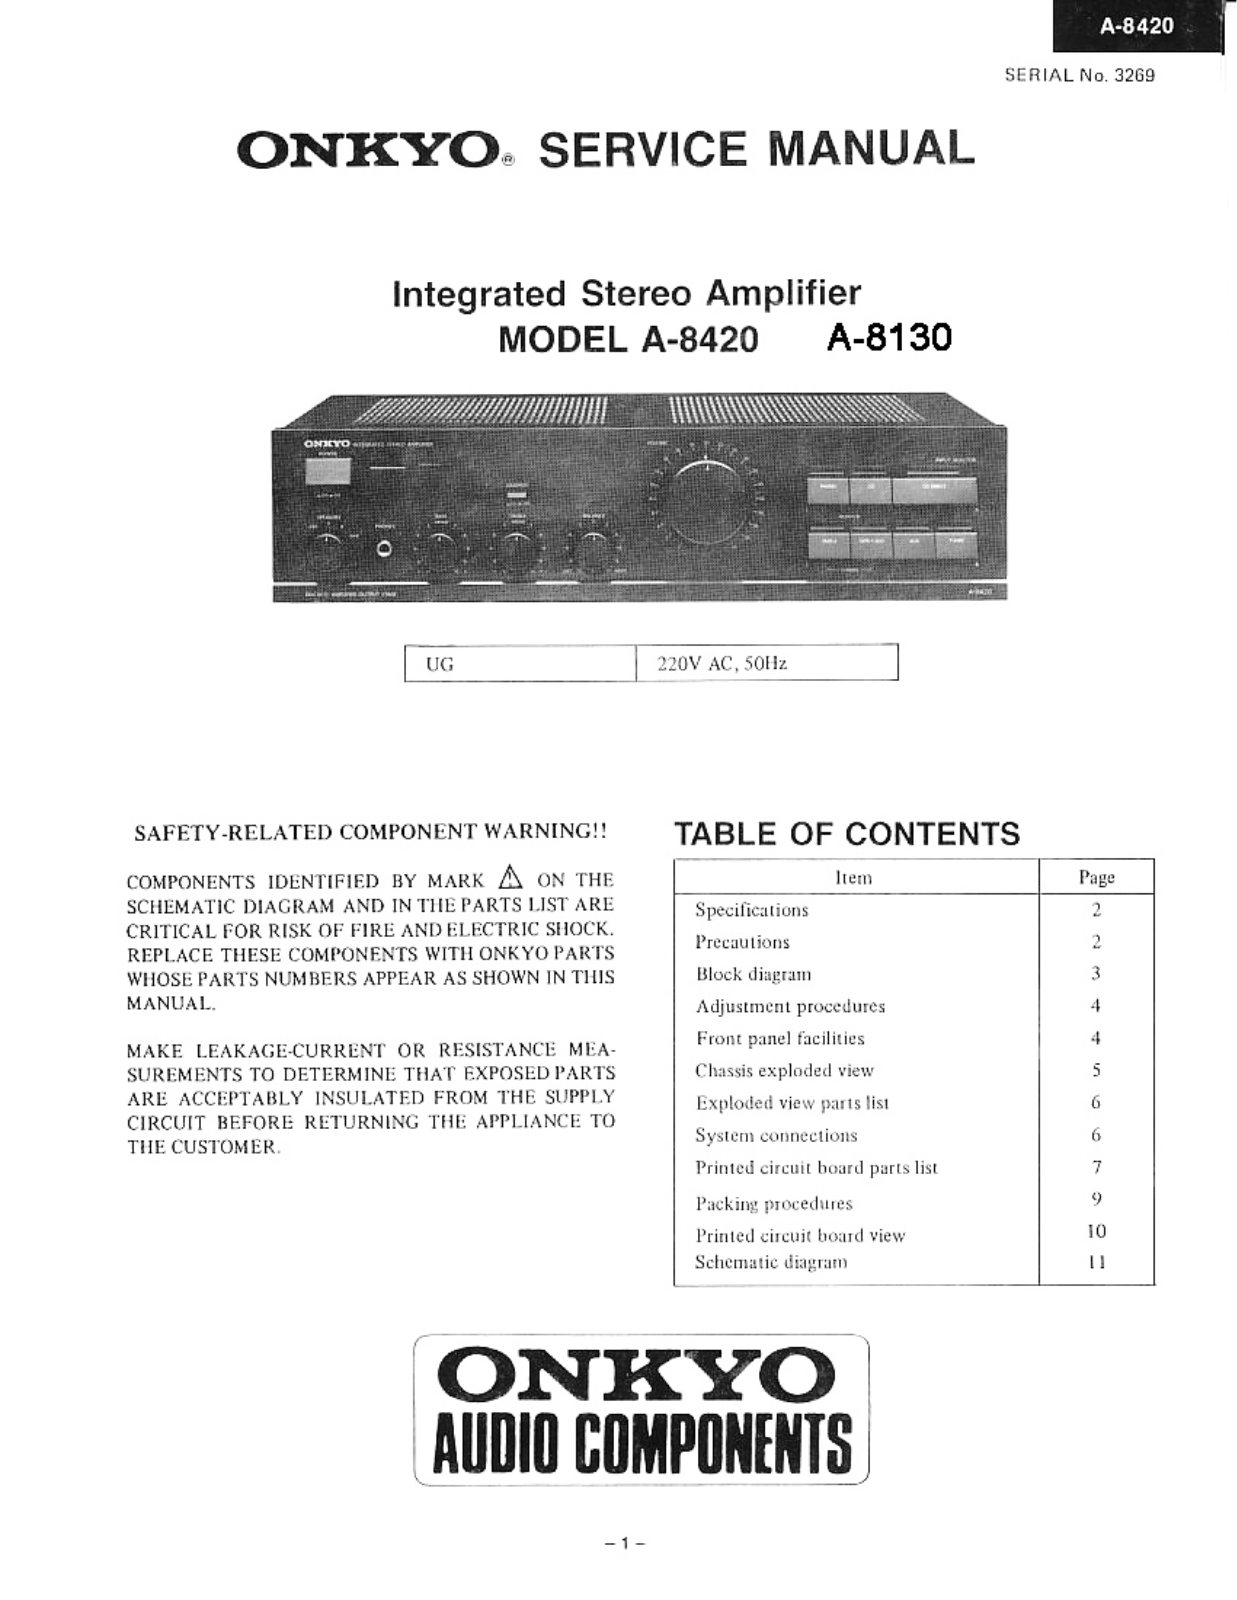 Onkyo A-8420, A-8130 Service Manual